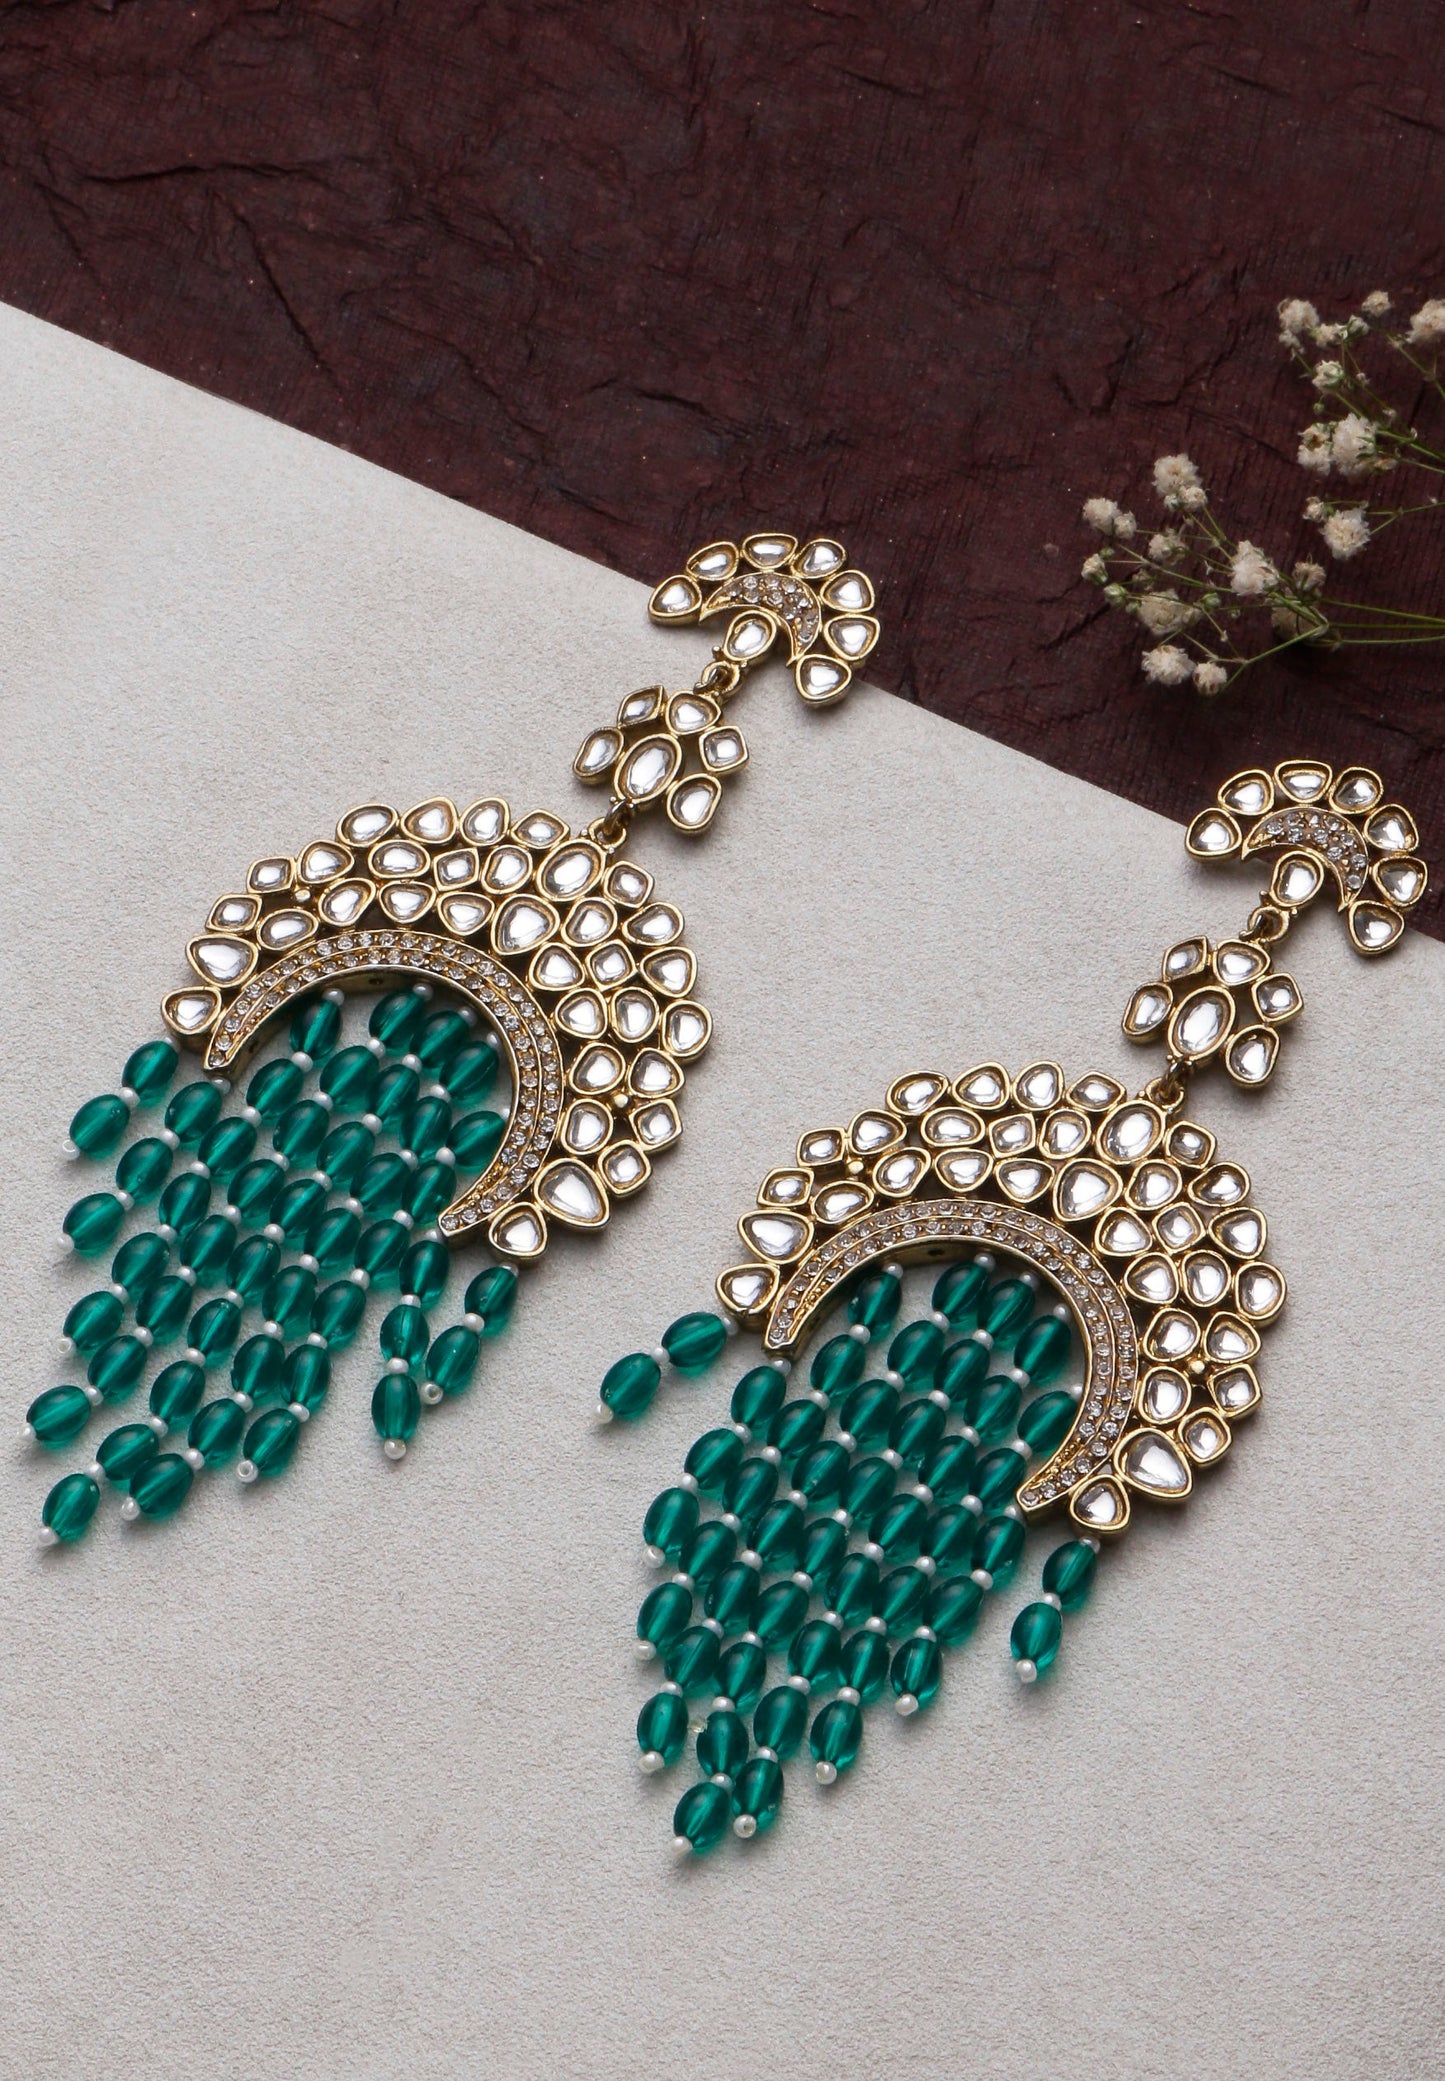 Swisni Alloy Golden Earrings with Green Beads For Women|For Girls|Gifting|Anniversary|Birthday|Girlfriend